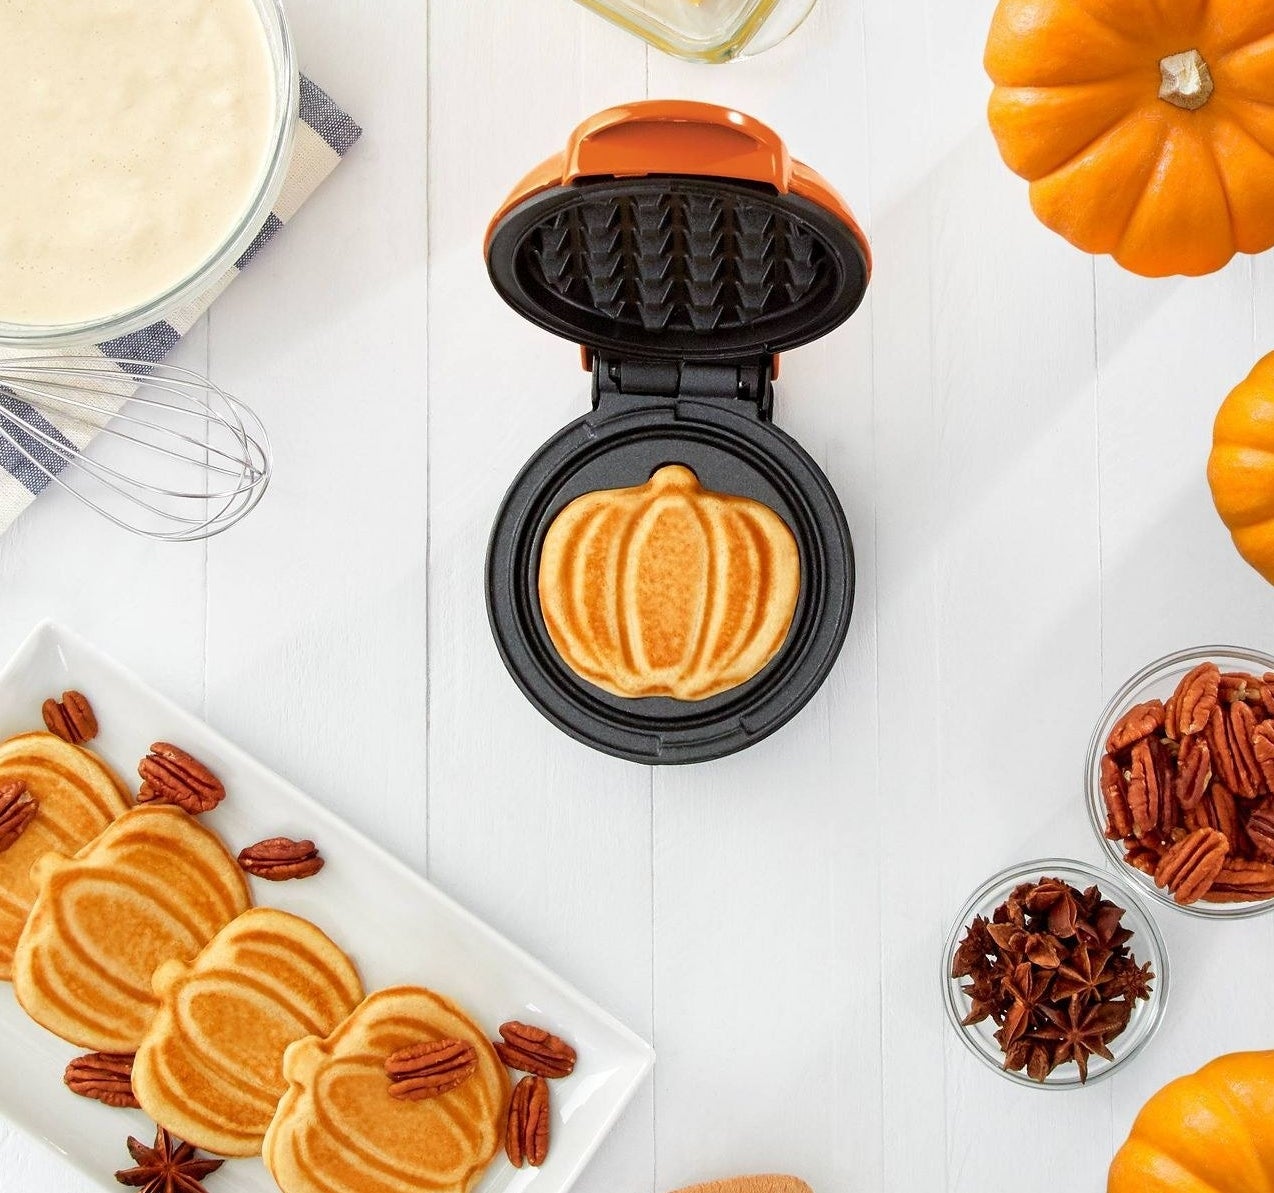 pumpkin-shaped waffles made using the orange griddle